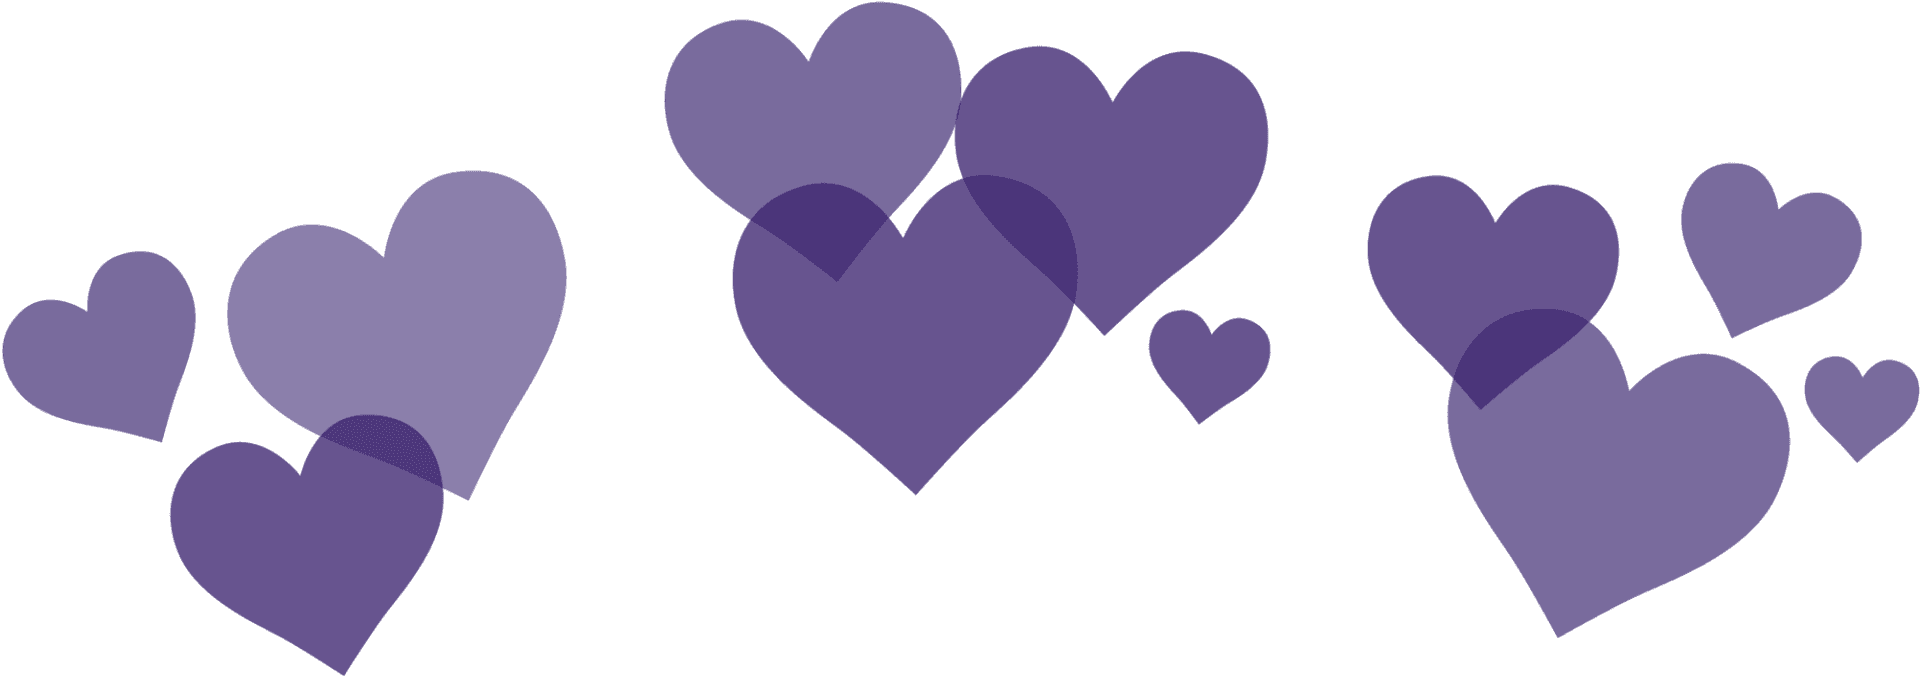 Navy Blue Hearts Transparent Background PNG